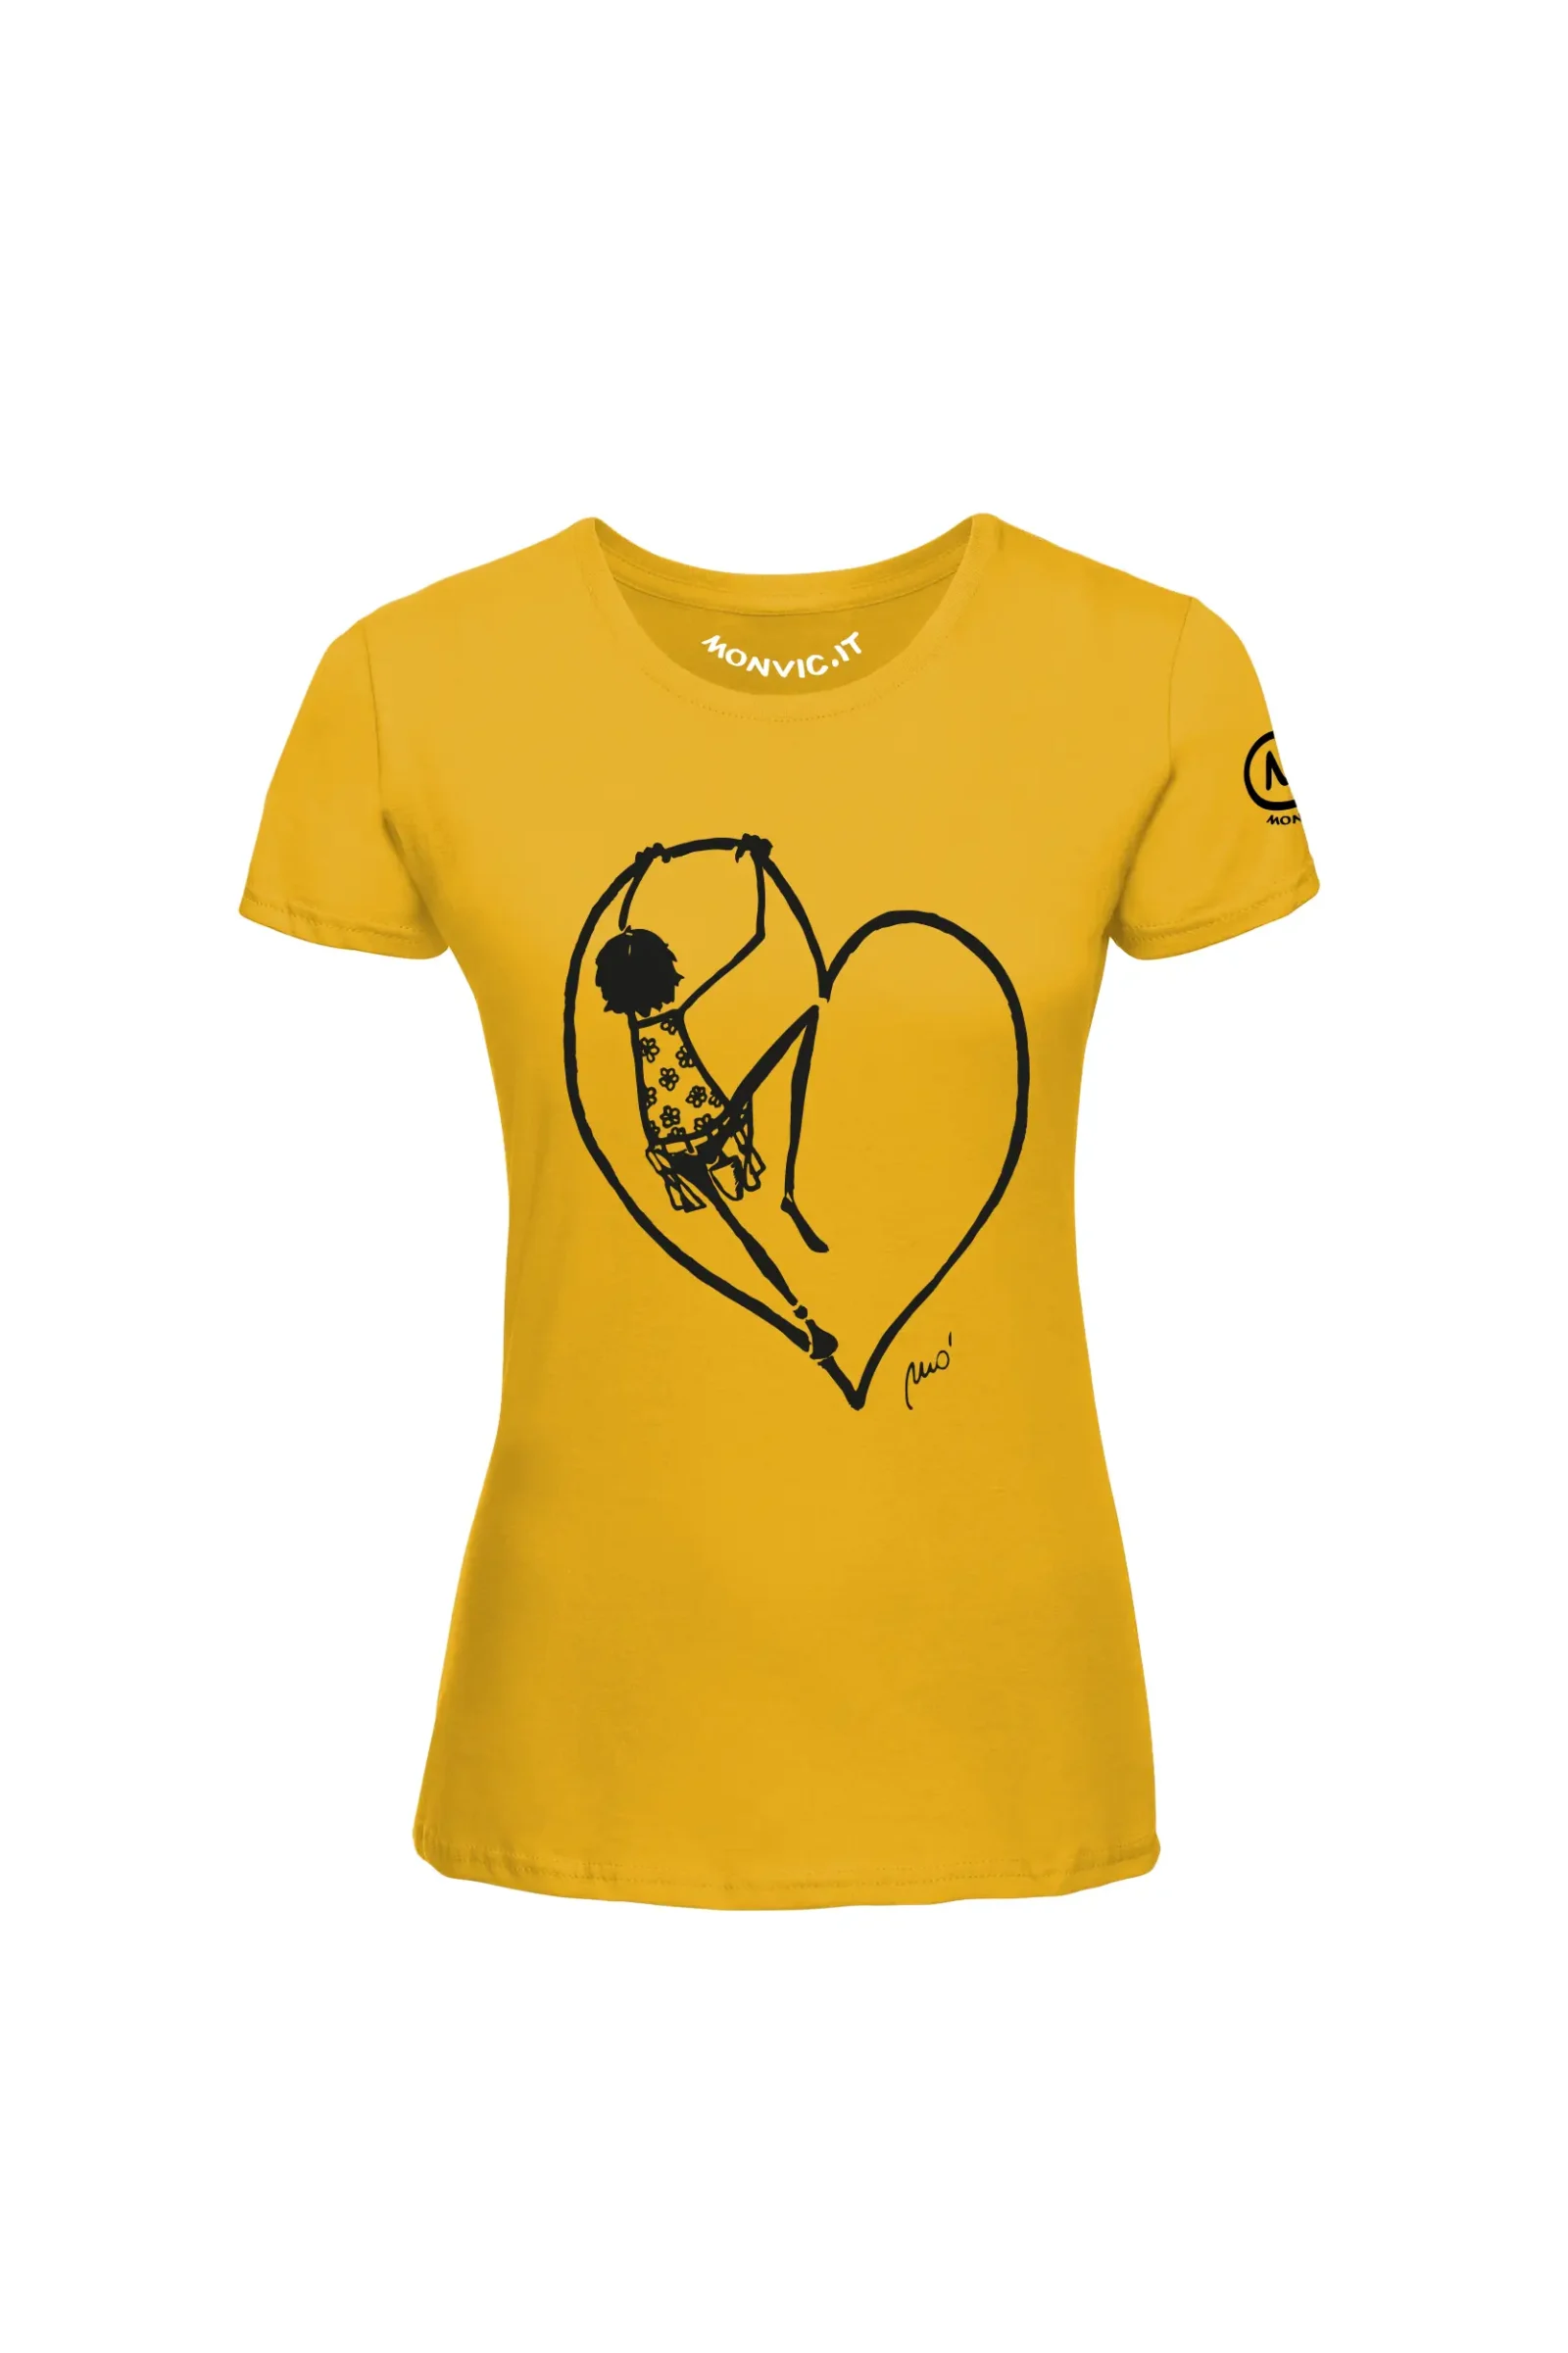 Women's climbing t-shirt - yellow cotton - "Pina" graphic - SHARON by MONVIC